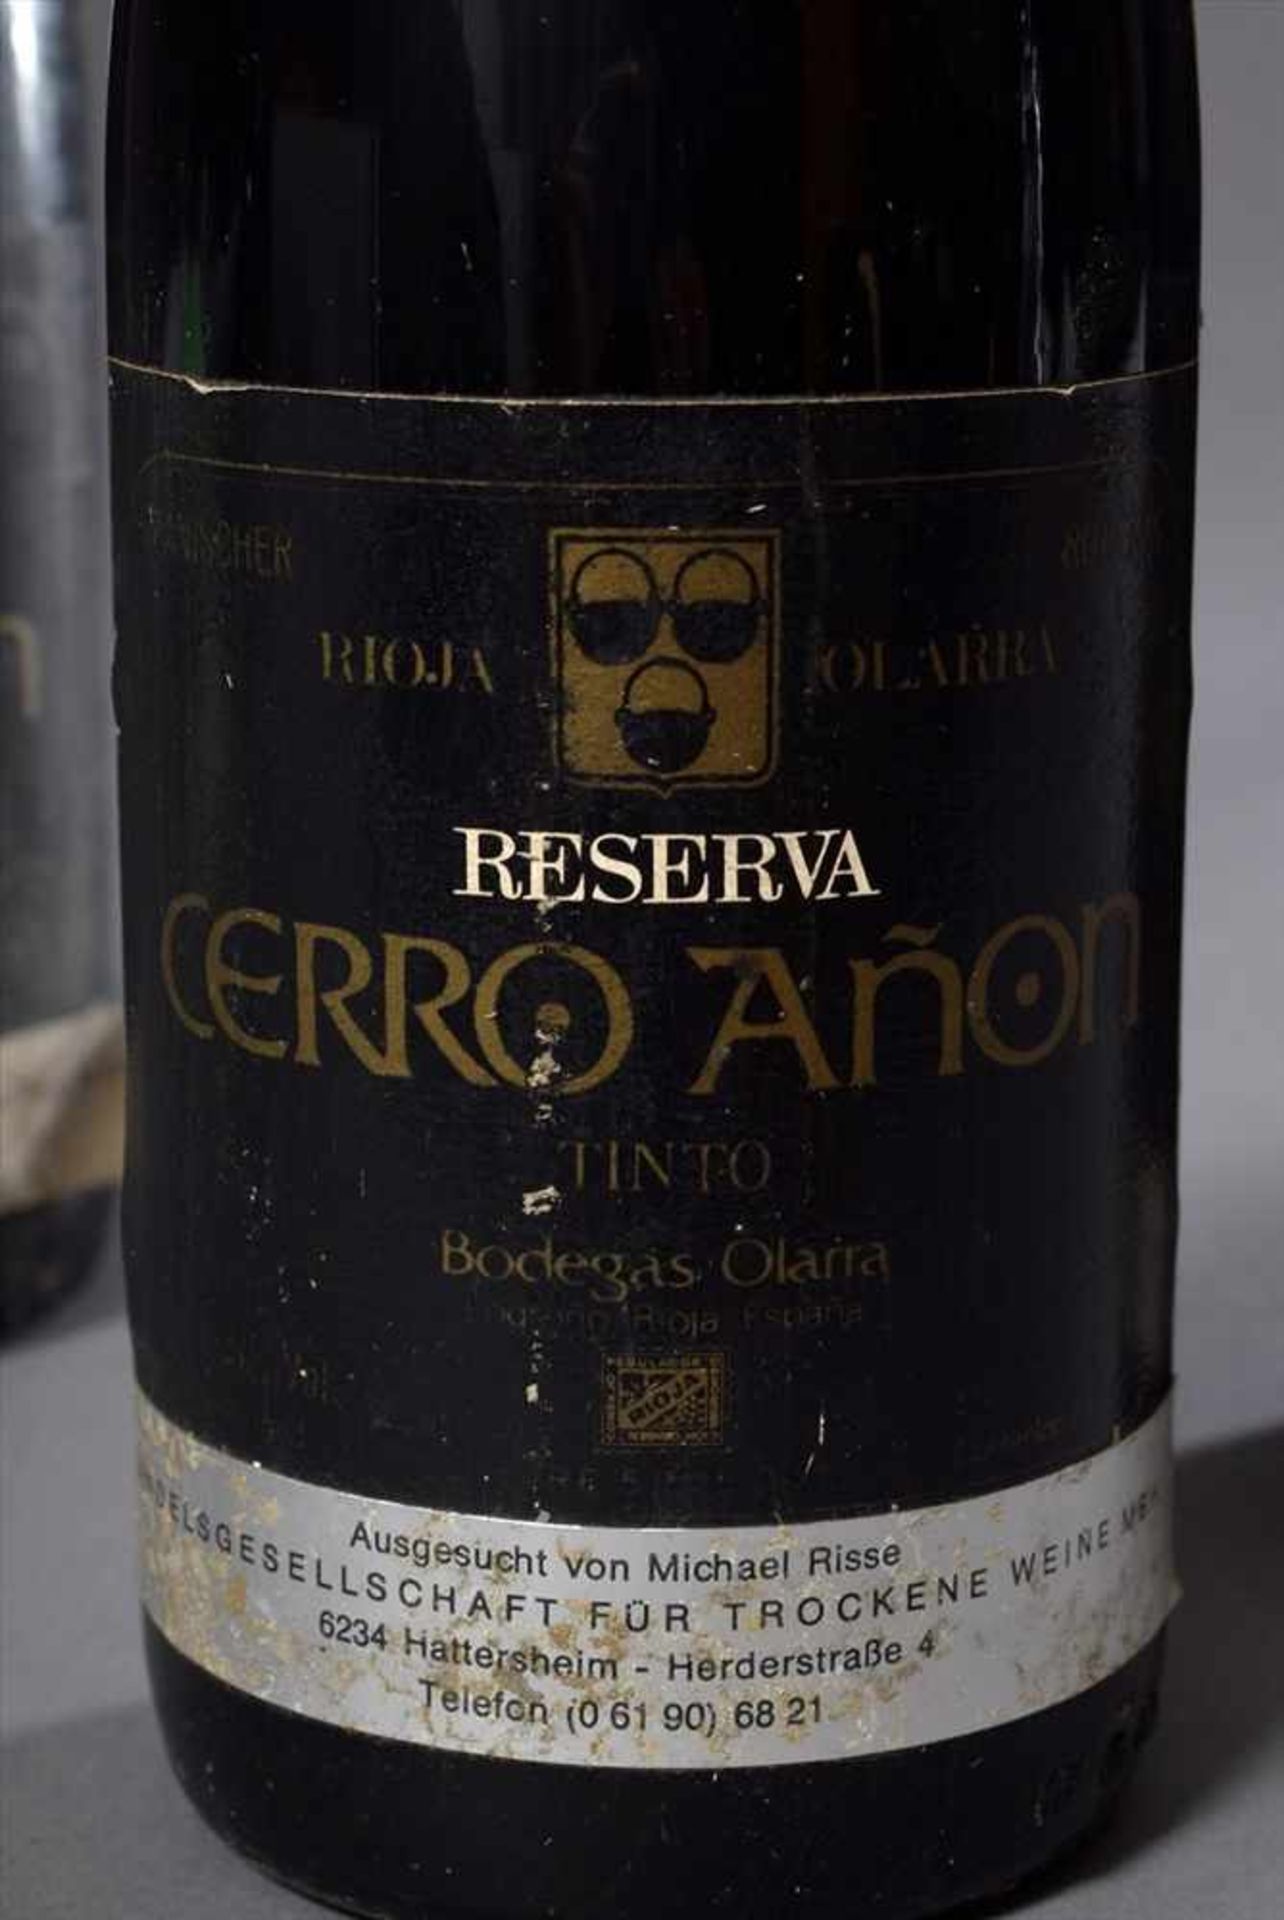 3 Flaschen Rotwein "Rioja Olarra, Reserva, Cerro Anon, Tinto, Bodegas Olarra", 1970, enthält - Image 2 of 4